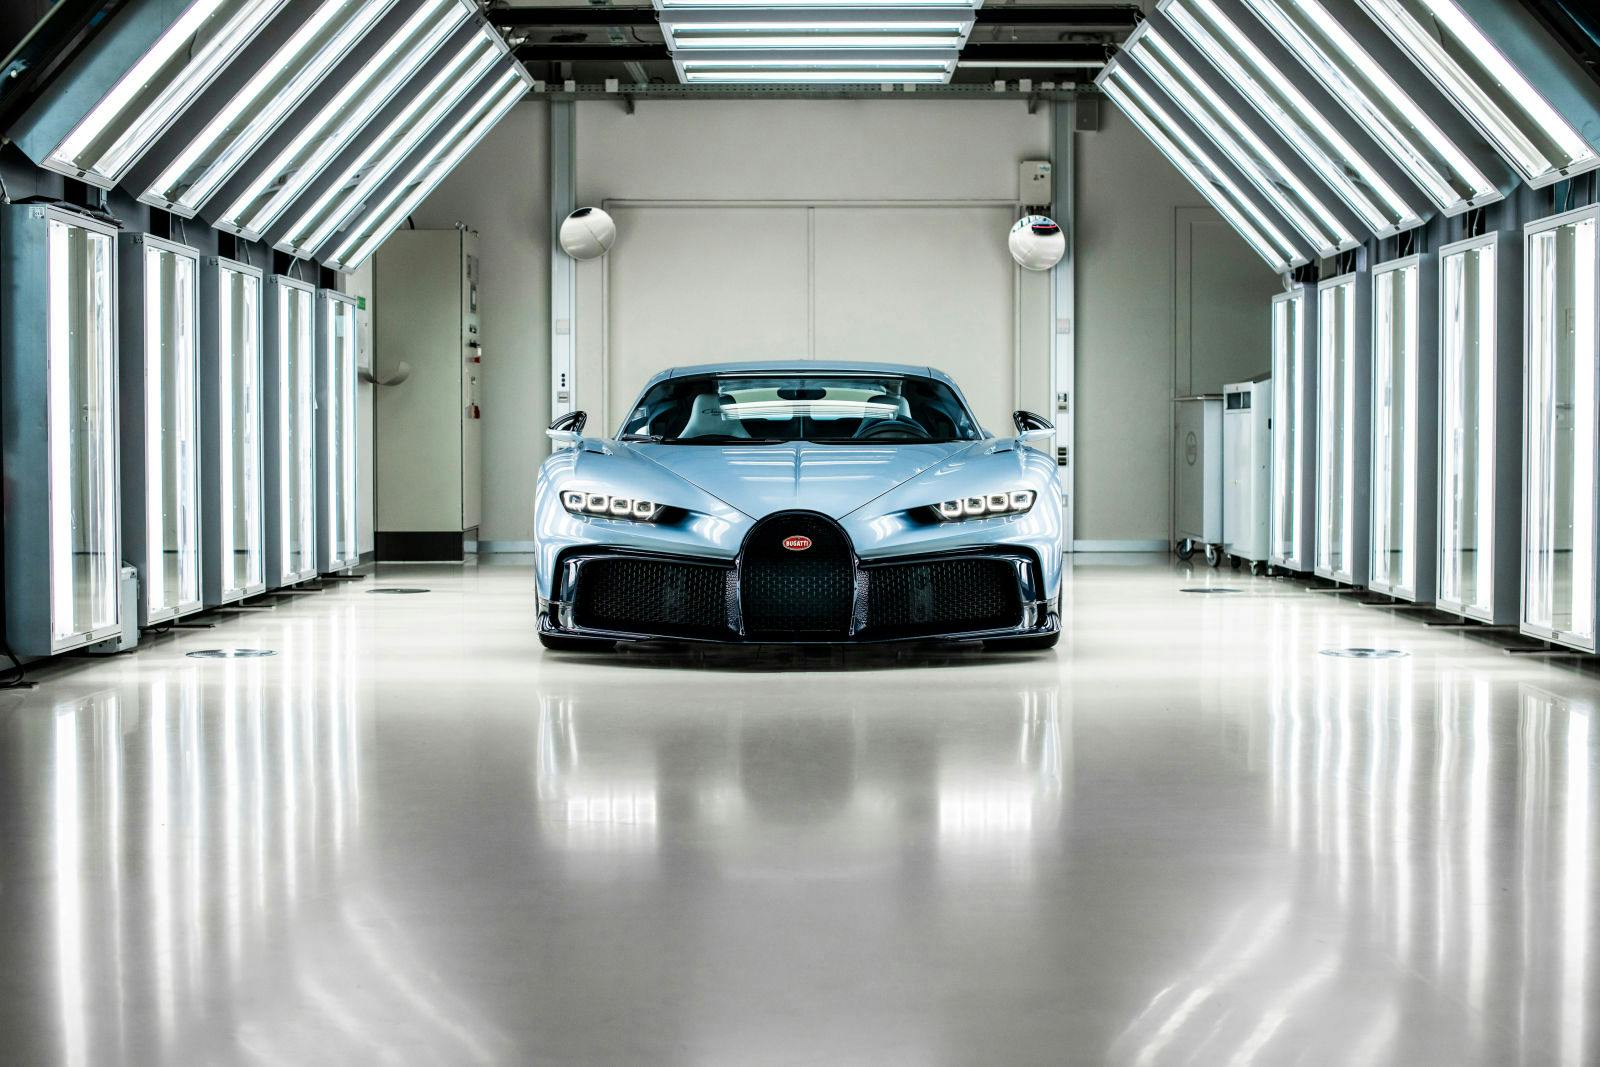 La Bugatti Chiron Profilée à l’Atelier de Molsheim.